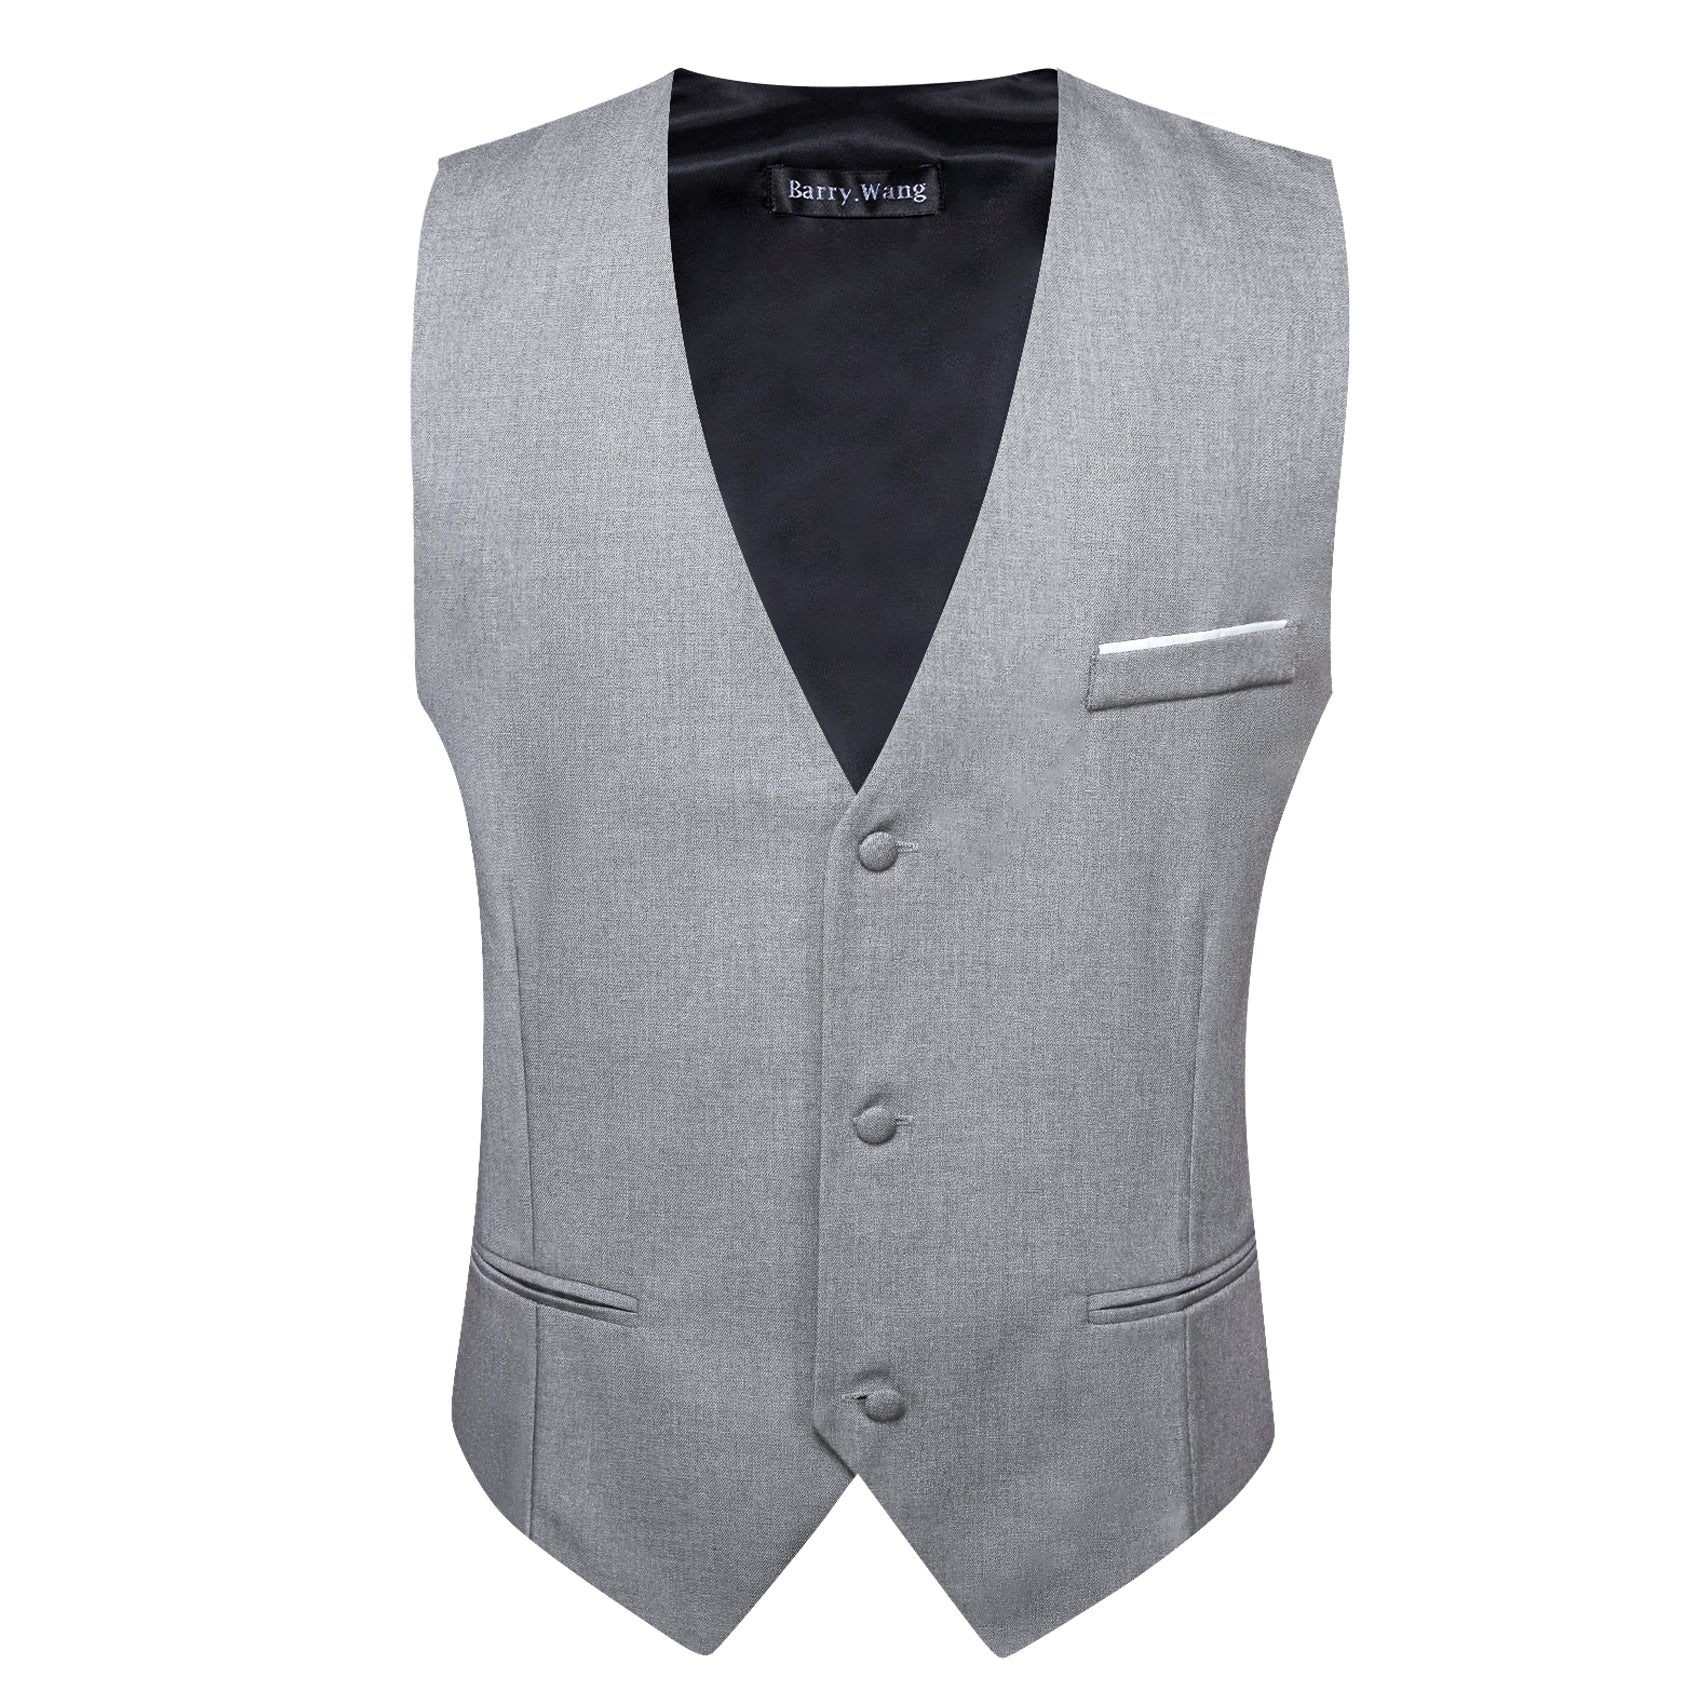 Barry.Wang Men's Work Vest Light Grey Solid Business Suit Silk Vest